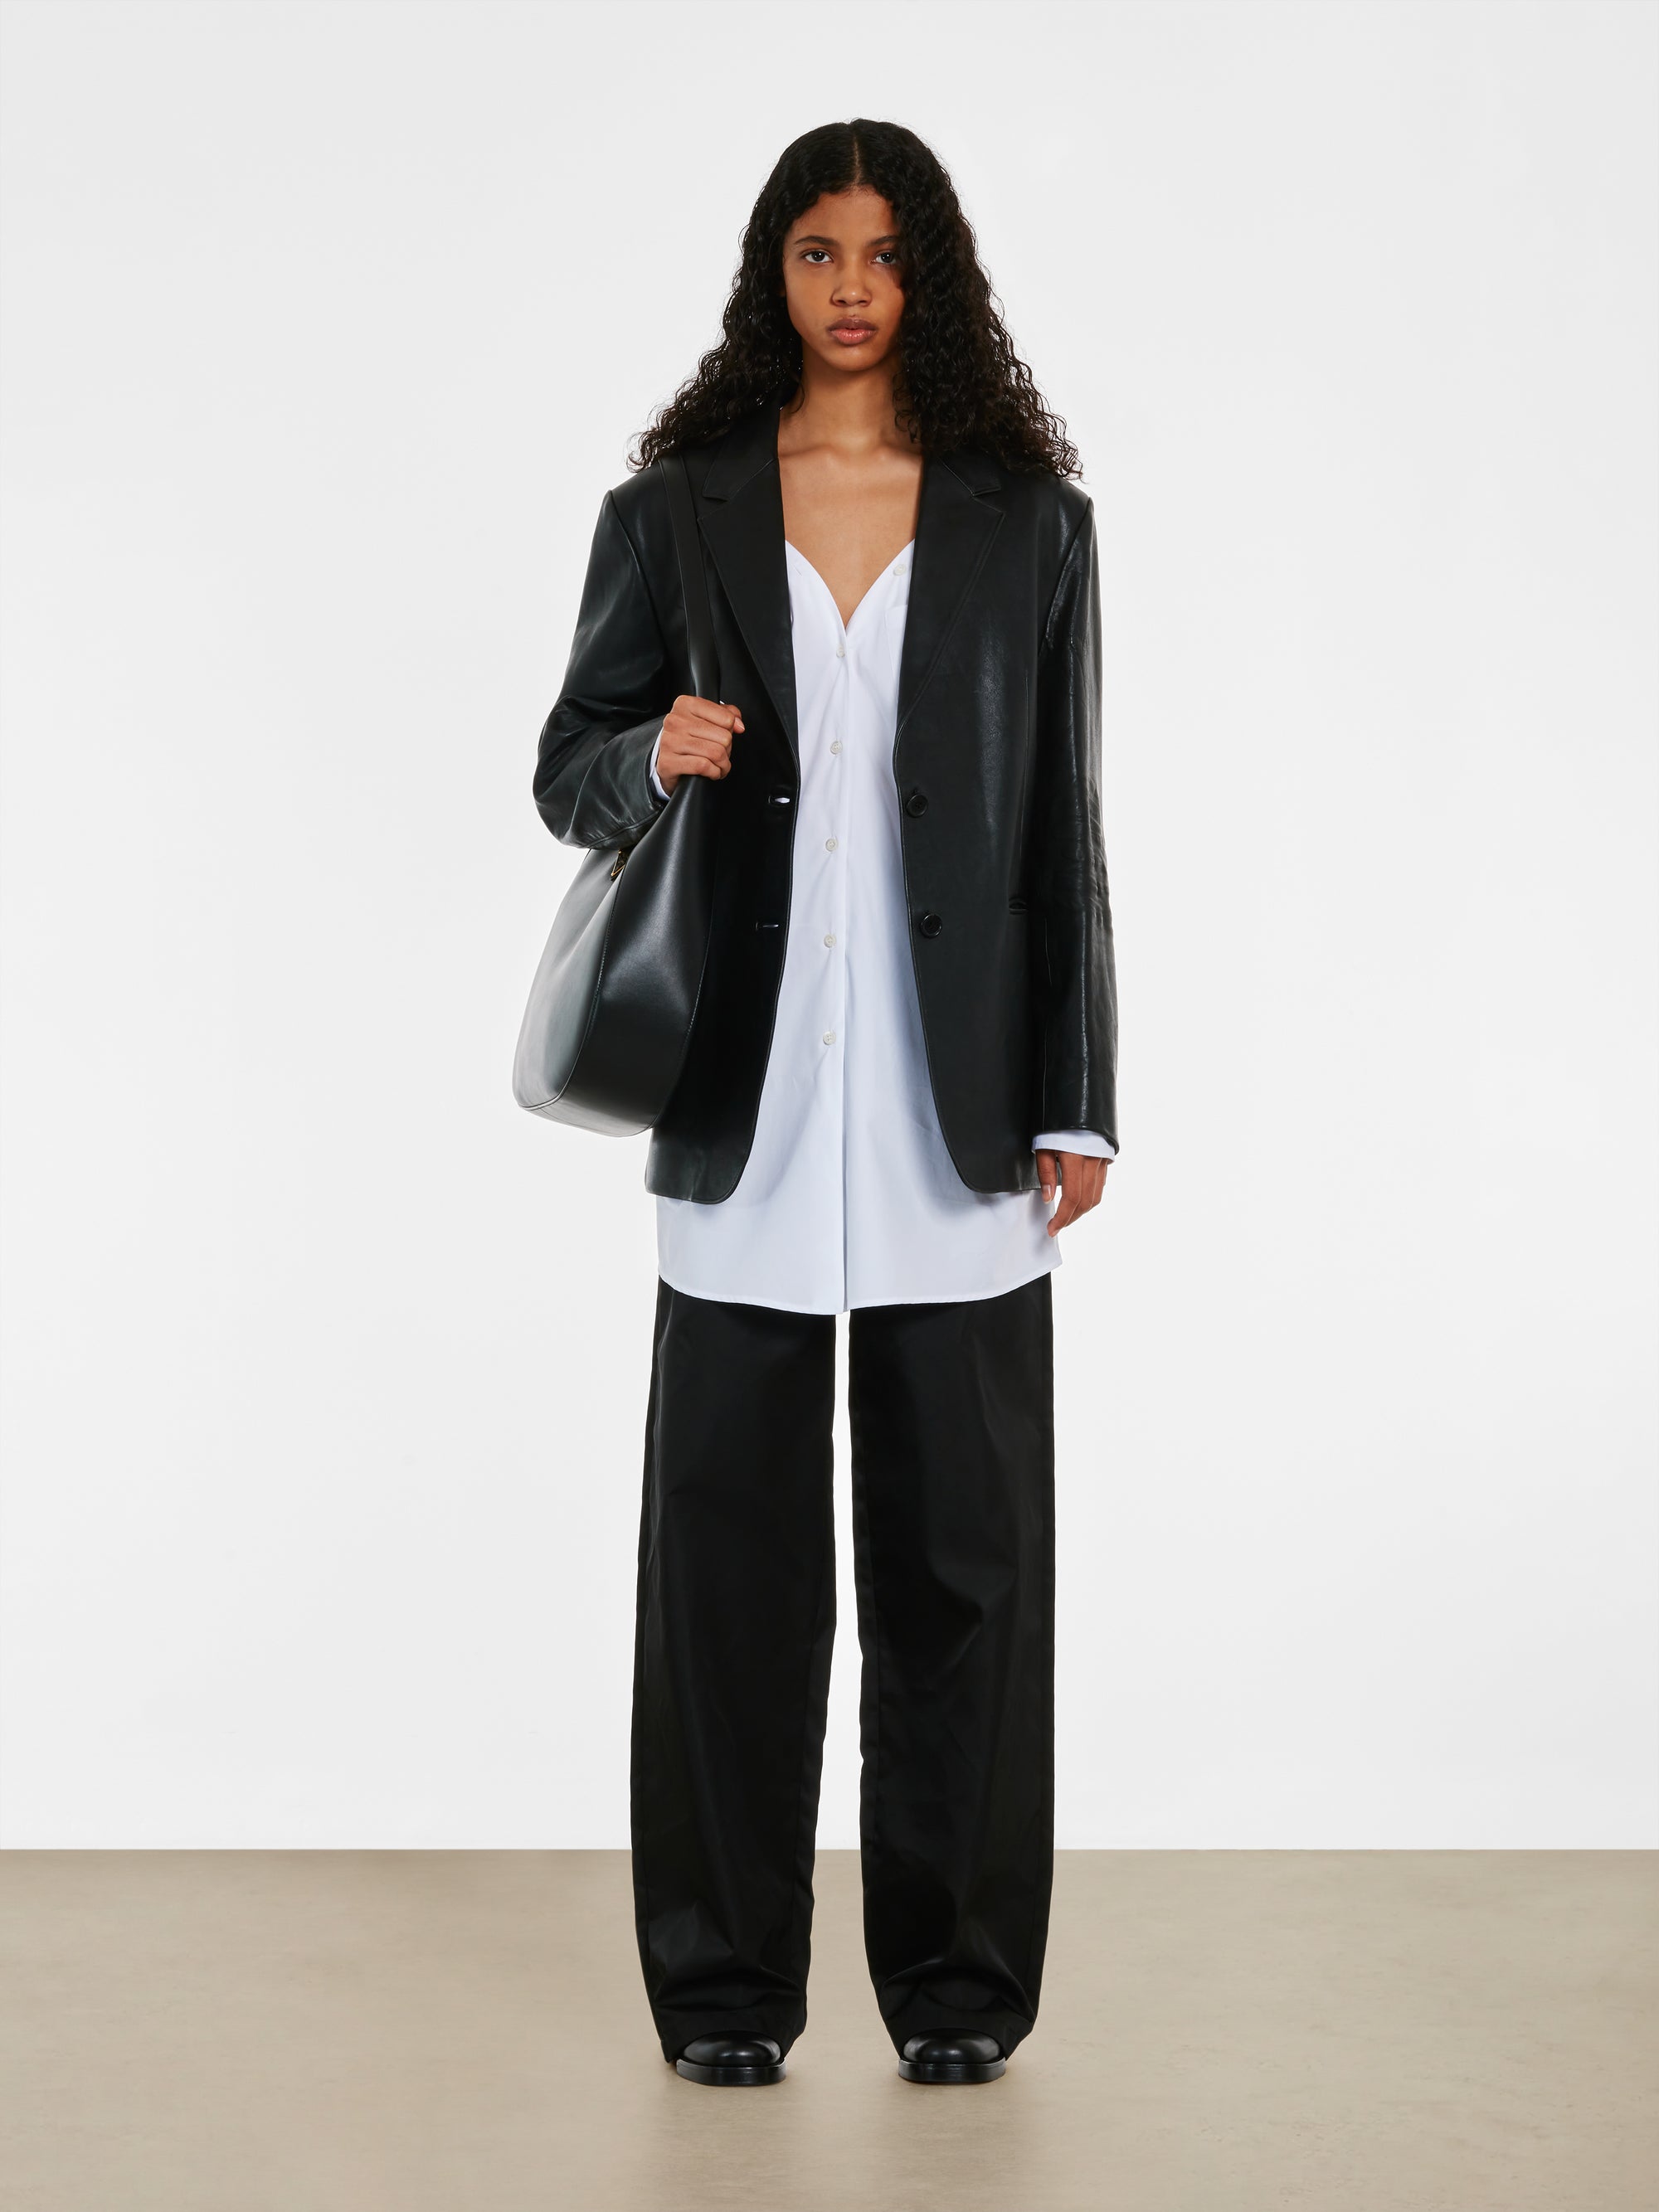 Prada - Women’s Leather Jacket - (Black) view 4